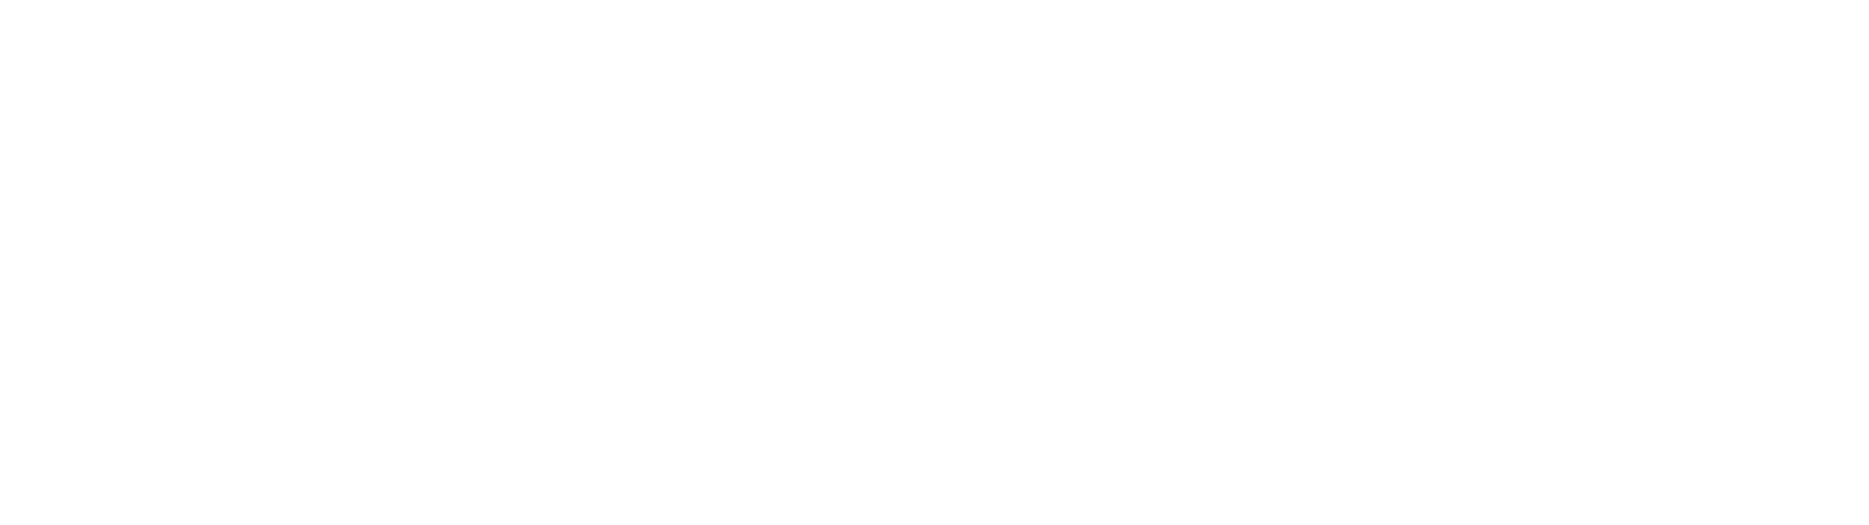 lubuds-logo-white